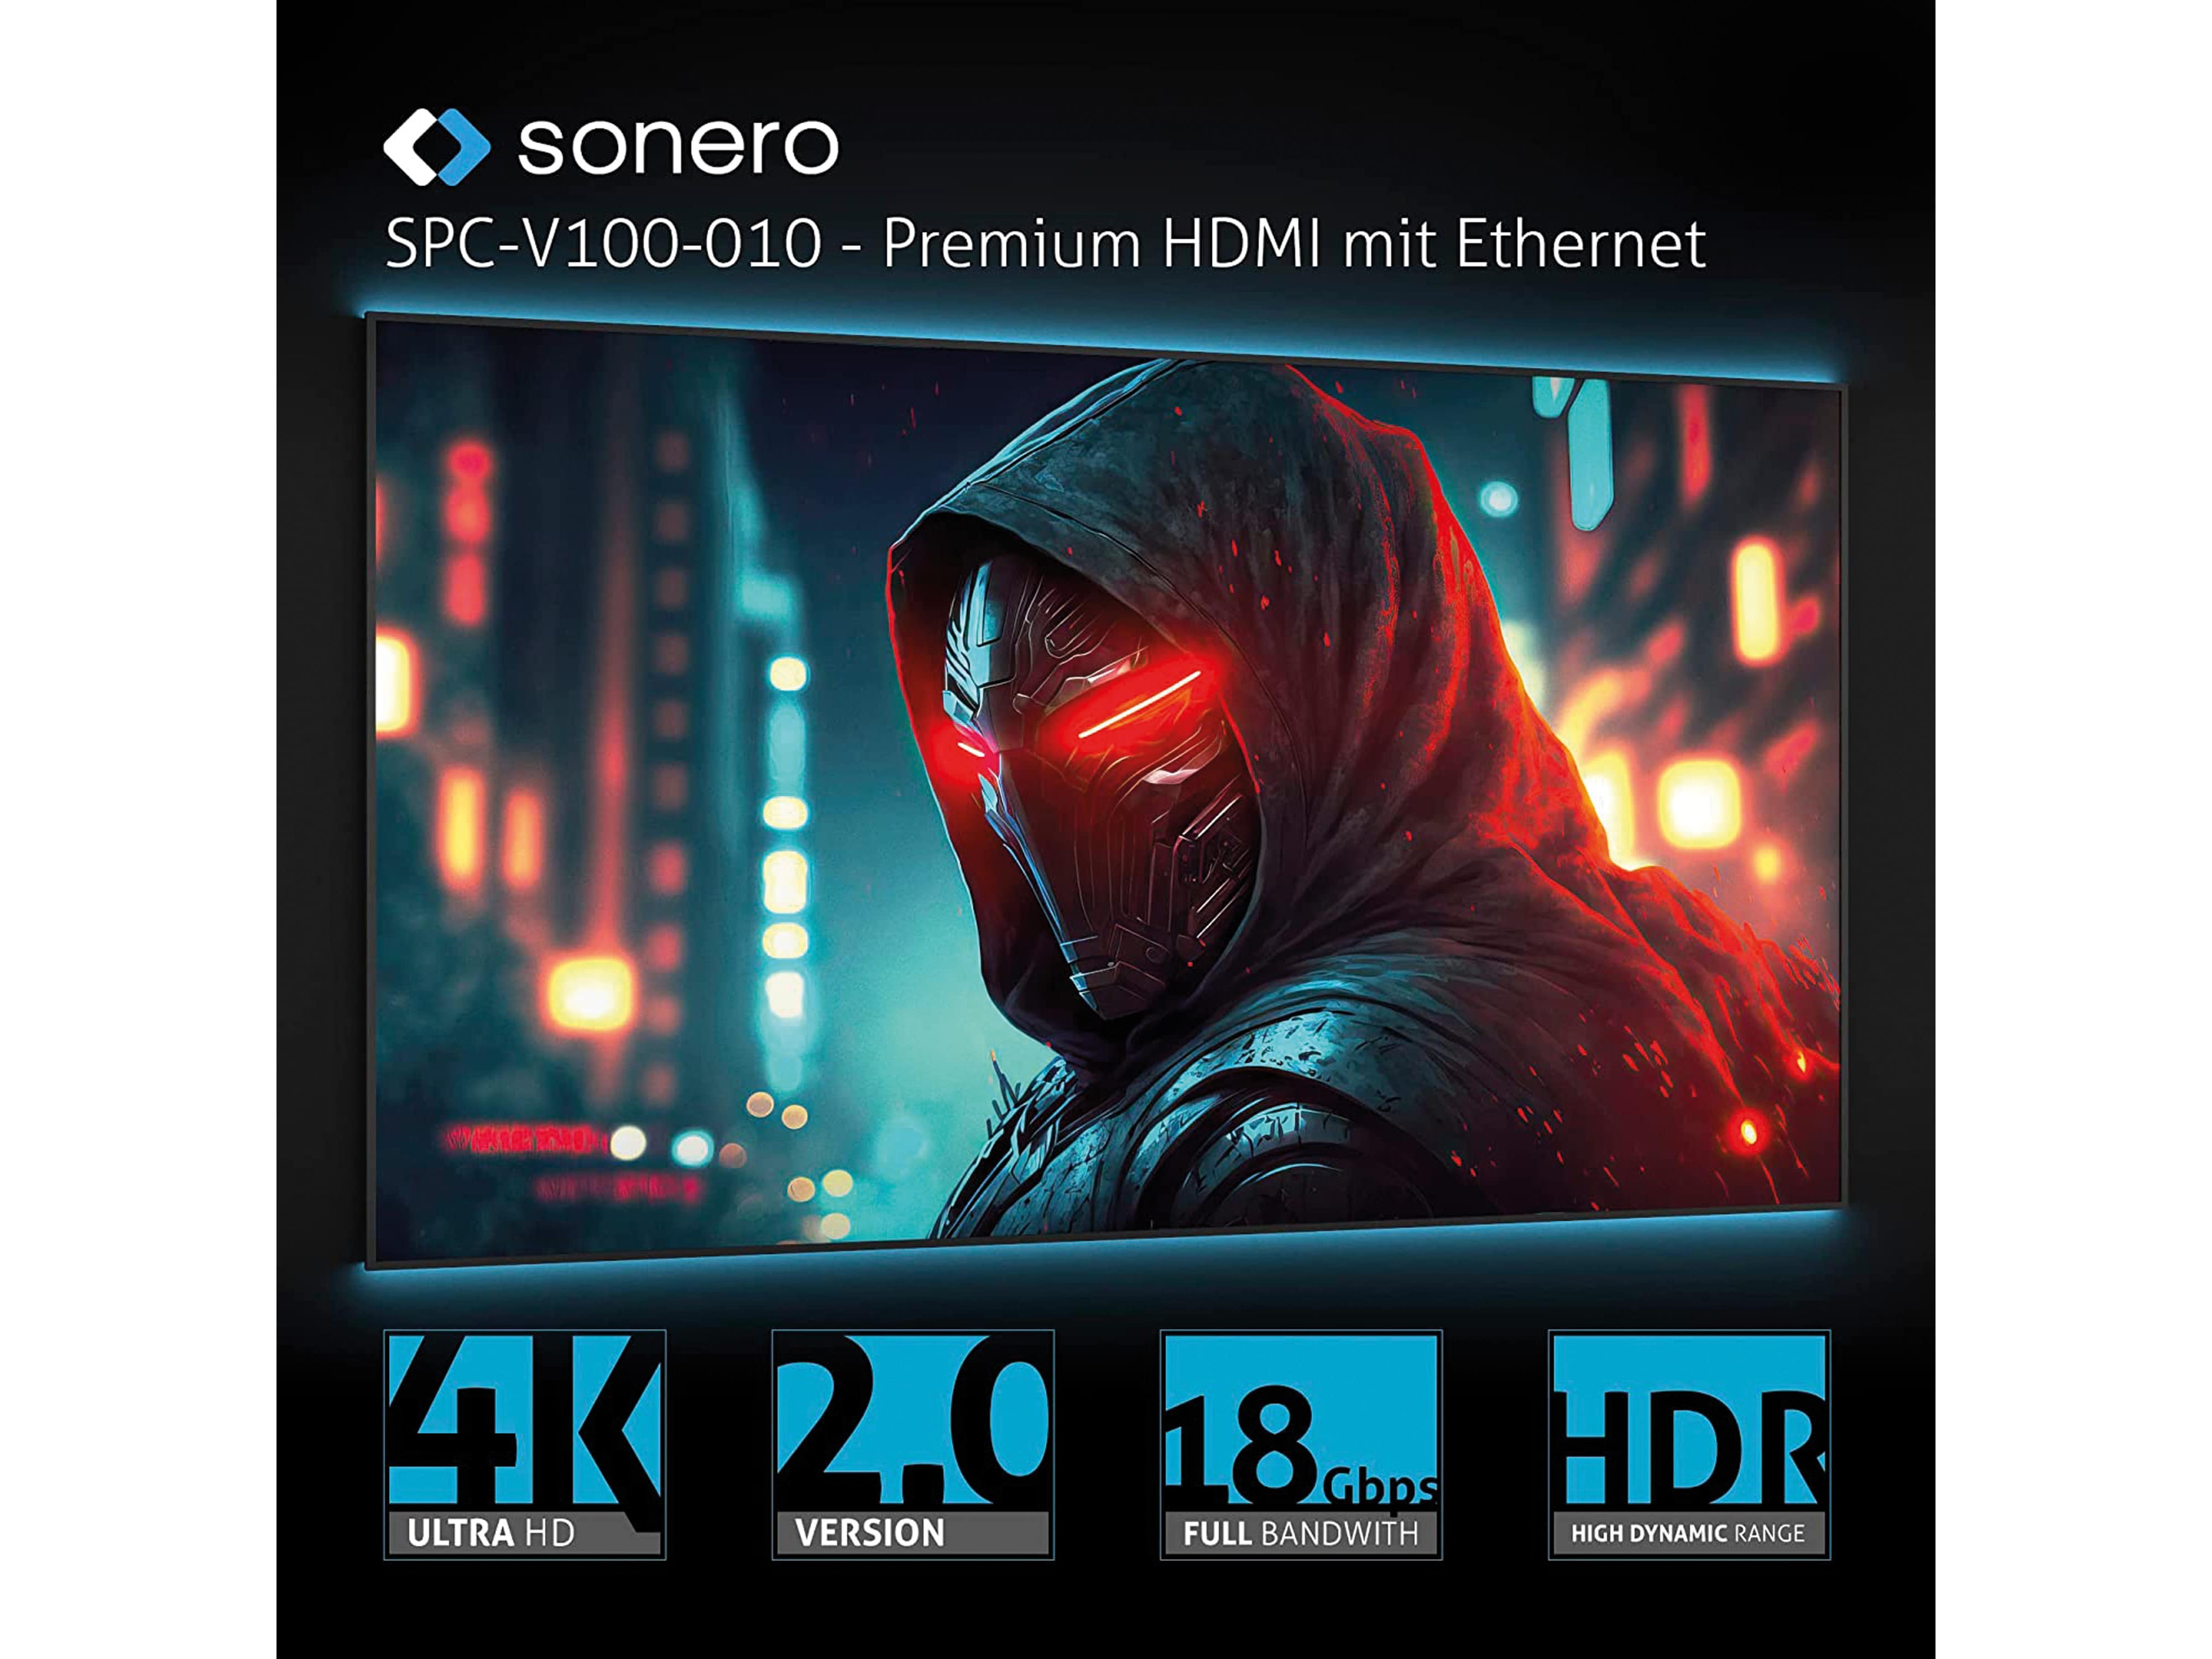 SONERO USB-C/HDMI-Kabel, 4K60, 18Gbps, Stecker/Stecker, grau/schwarz, 2 m